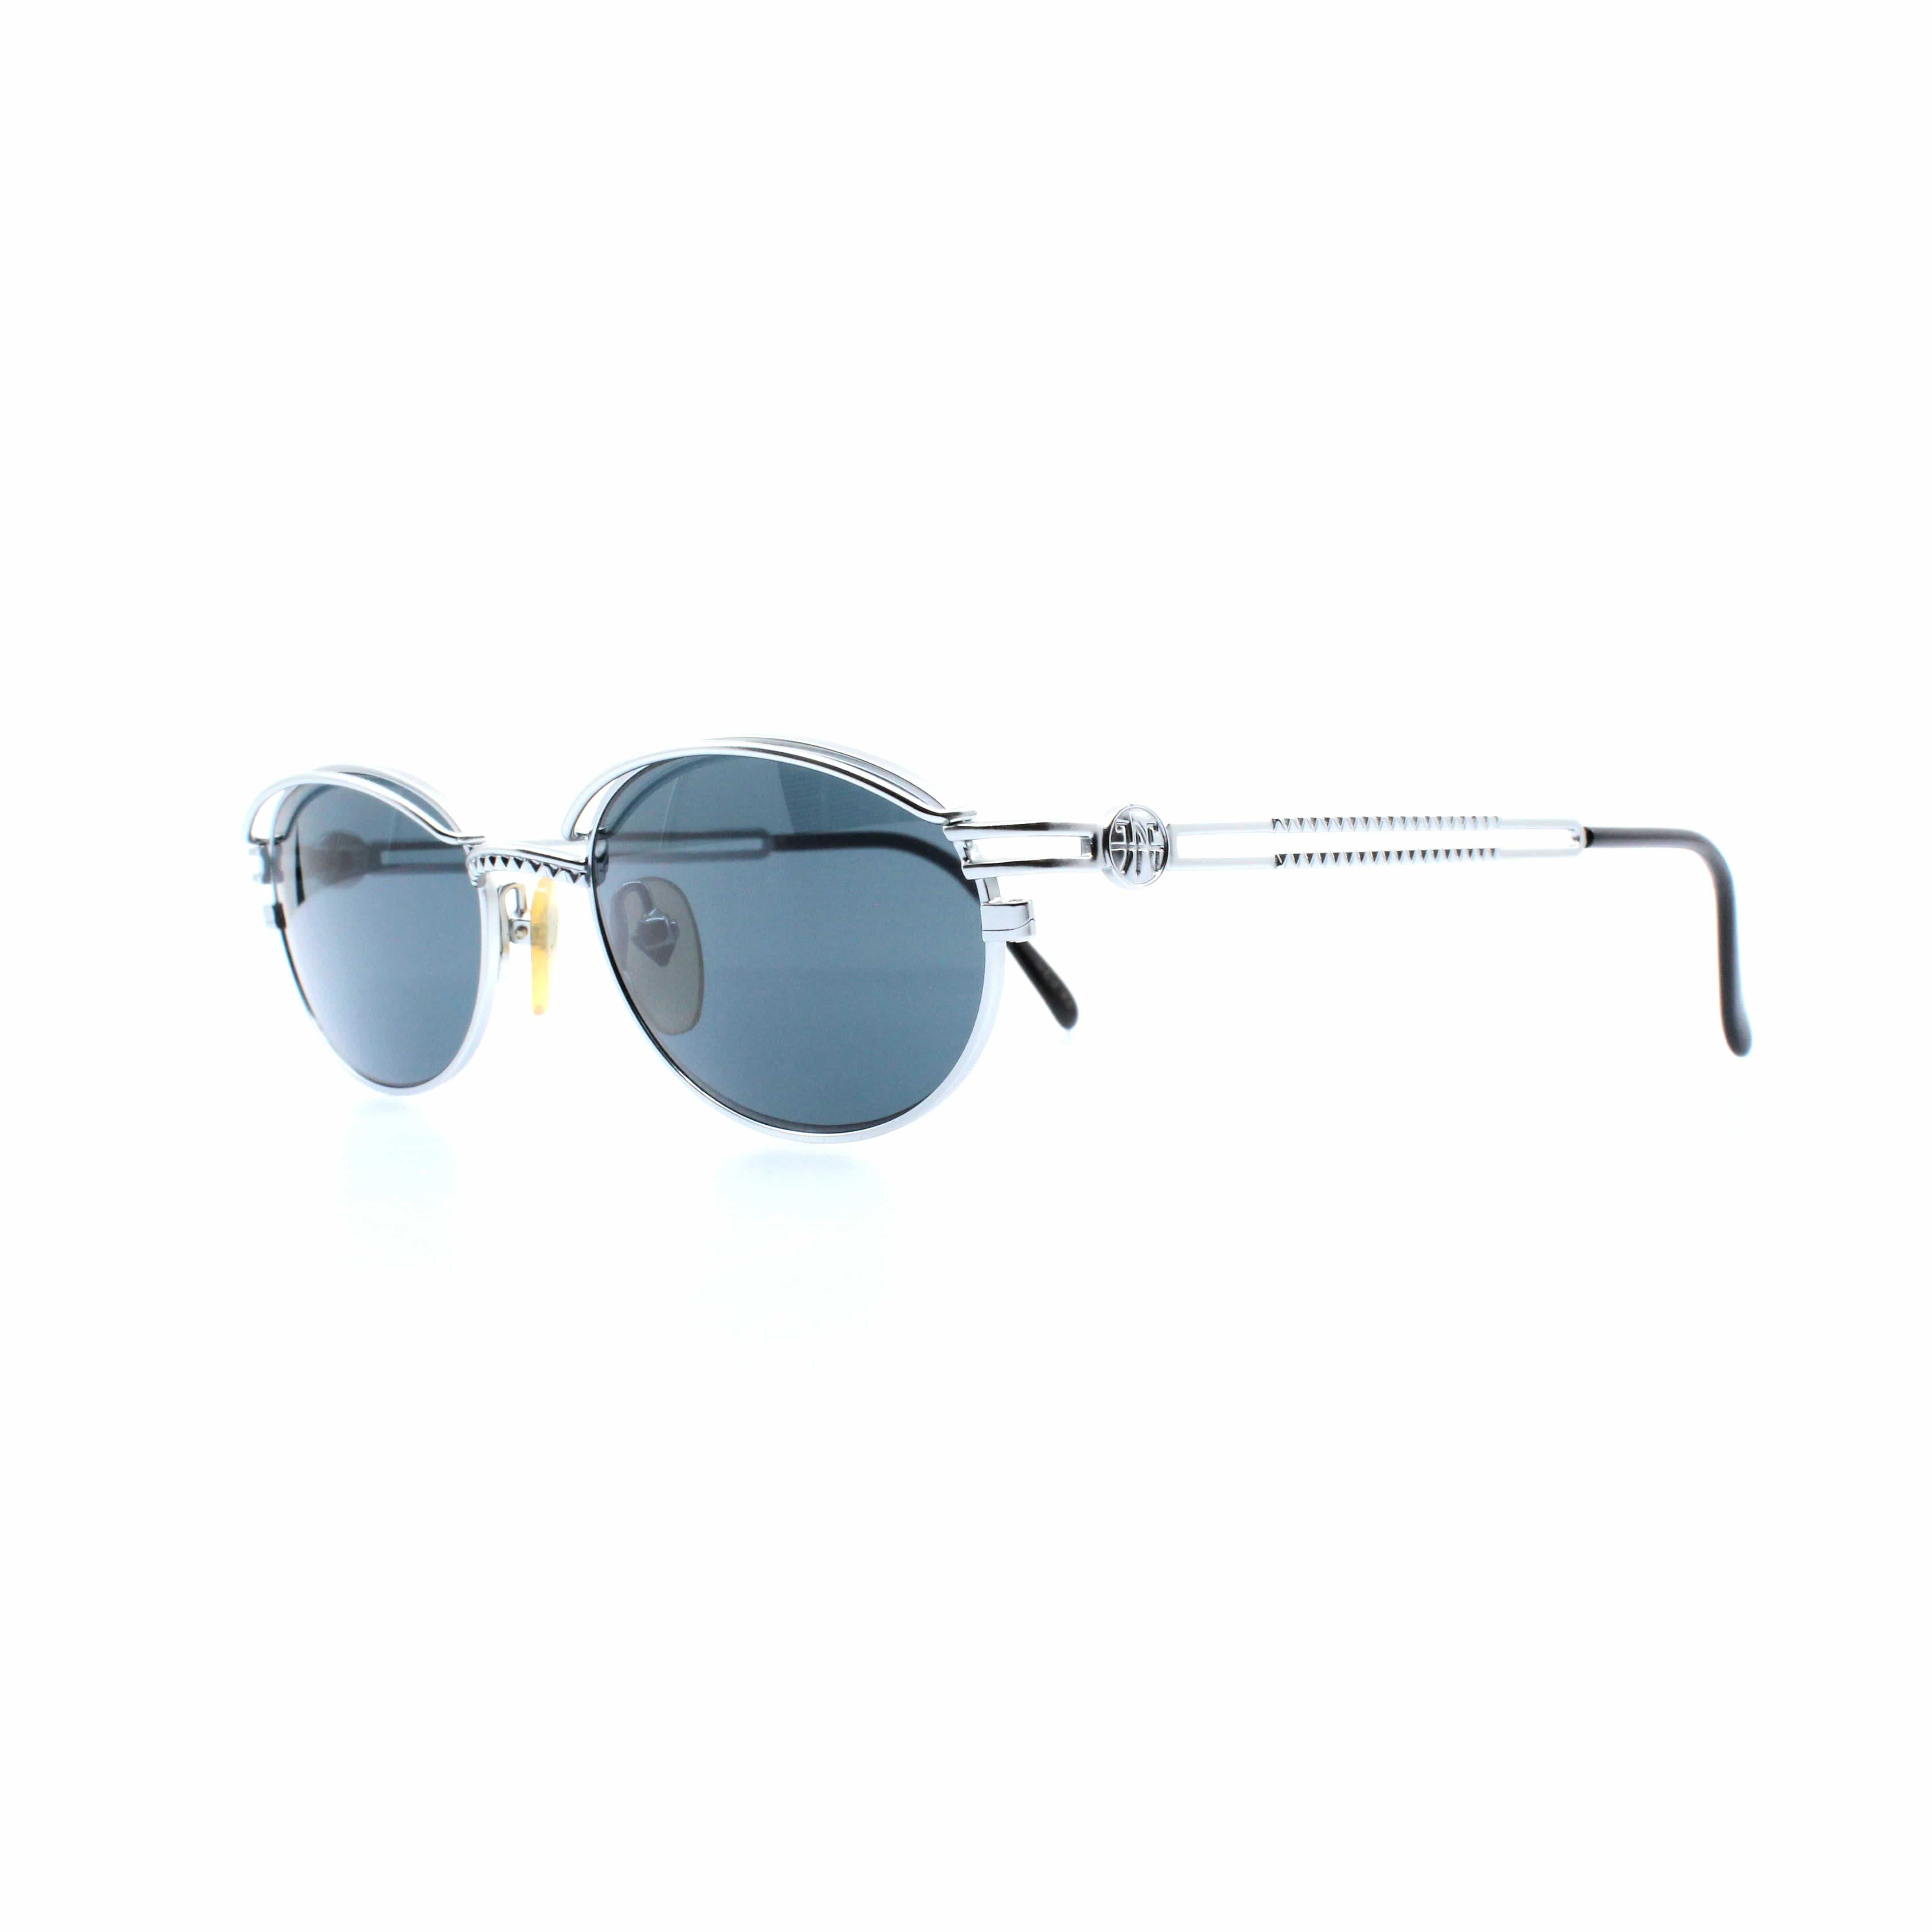 Silver Vintage Jean Paul Gaultier 58-6104 Sunglasses